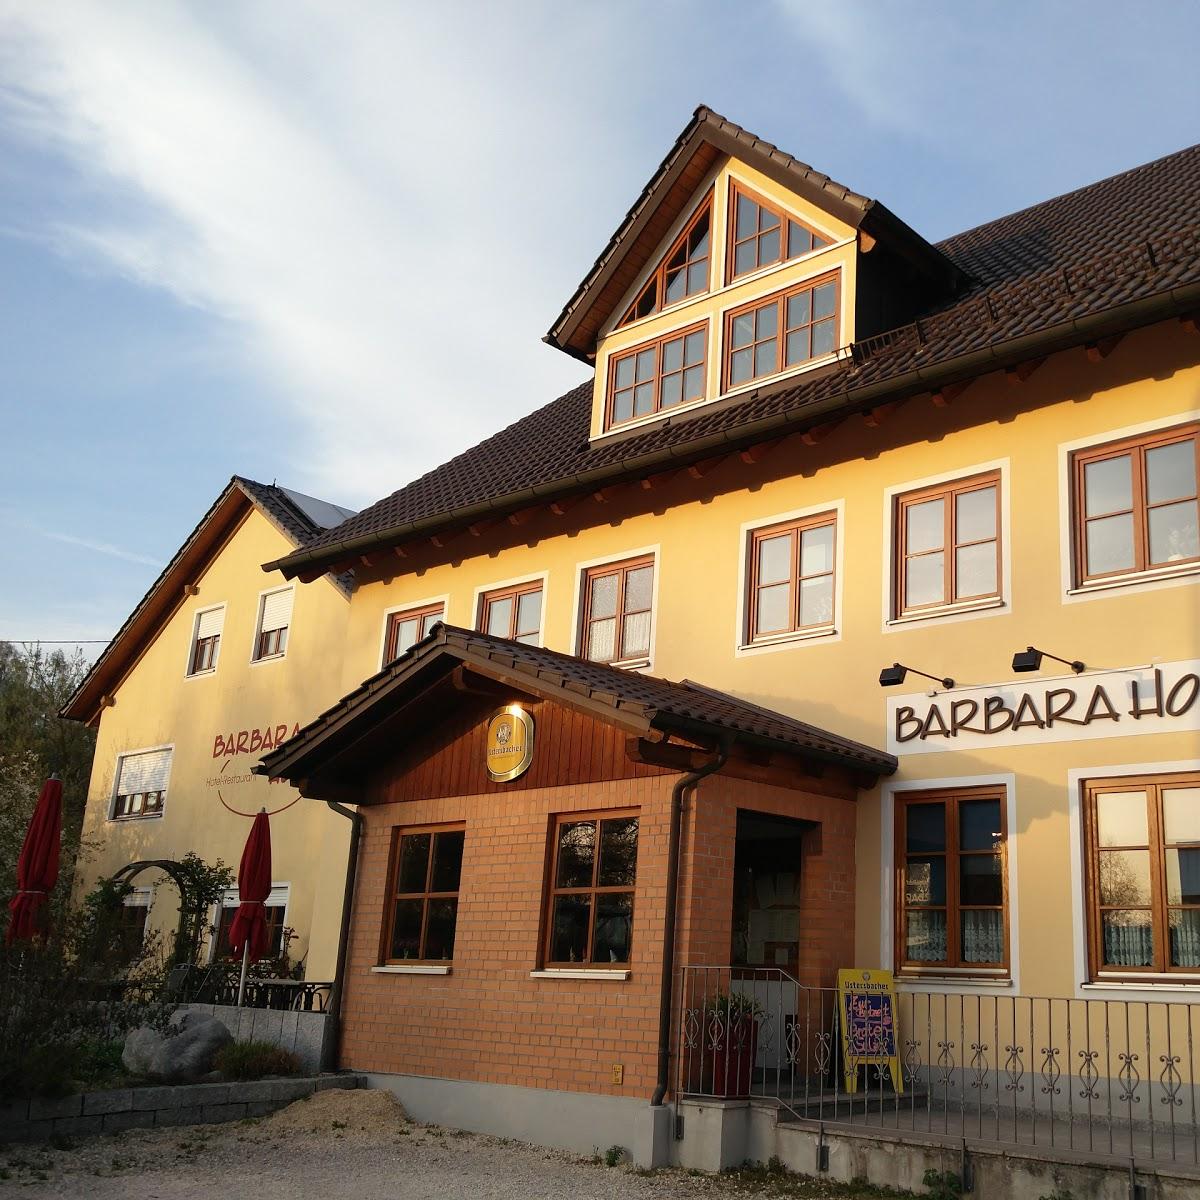 Restaurant "Barbarahof" in Thannhausen